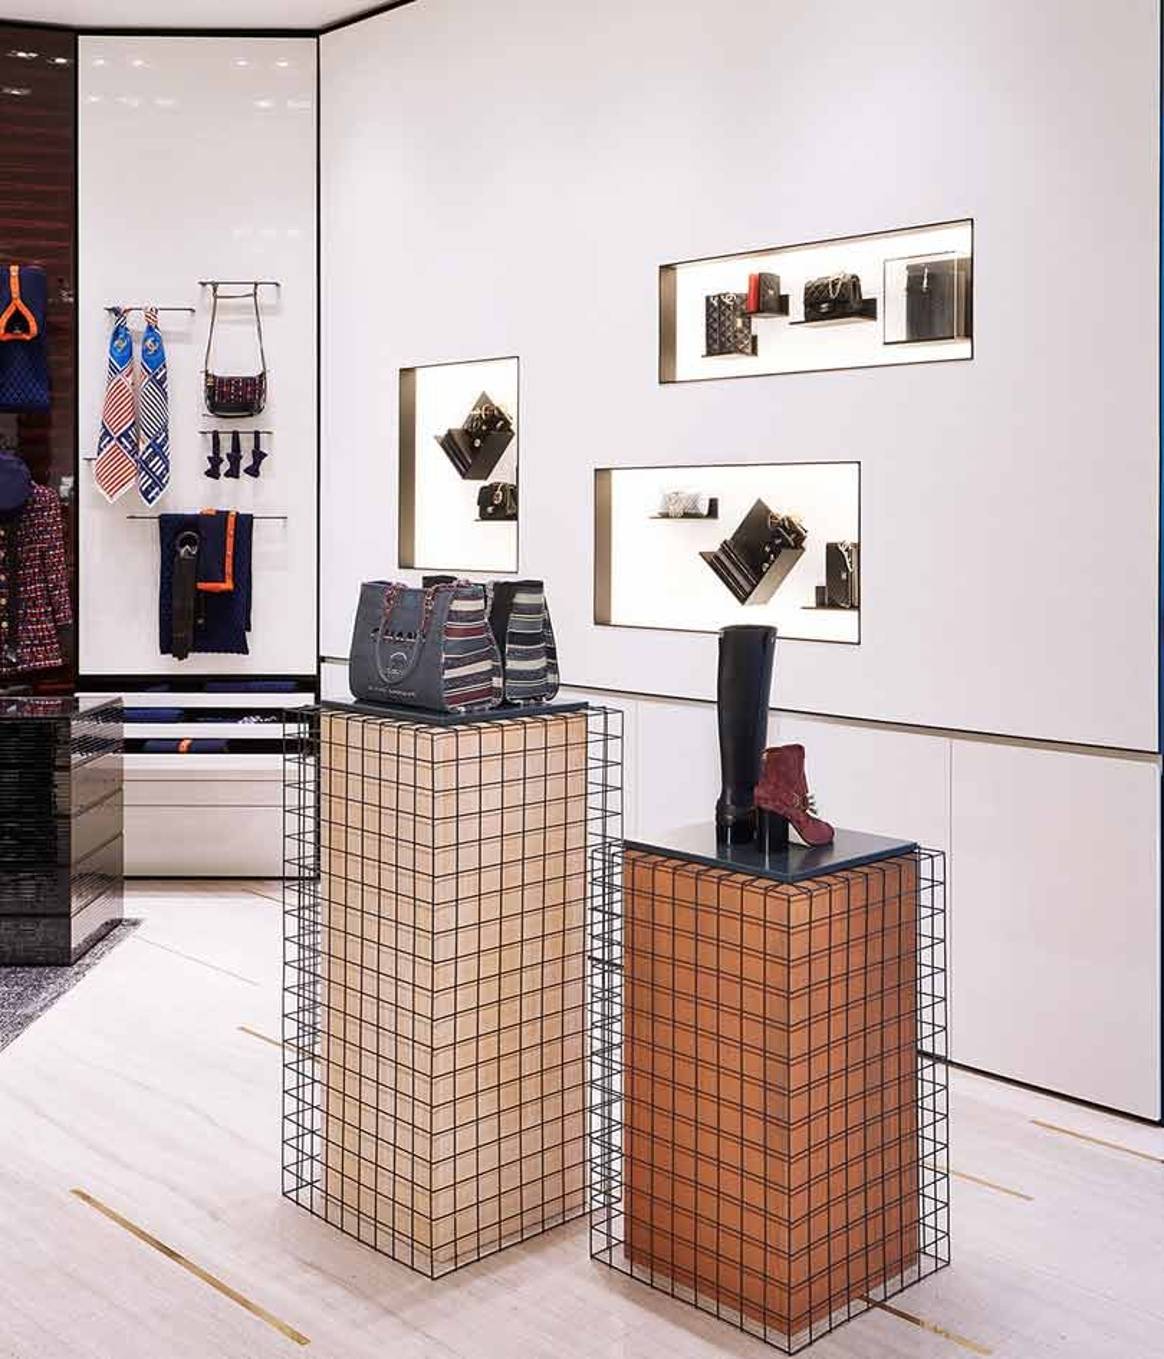 Открылся обновленный бутик Chanel в ТЦ "Крокус Сити Молл" - фото